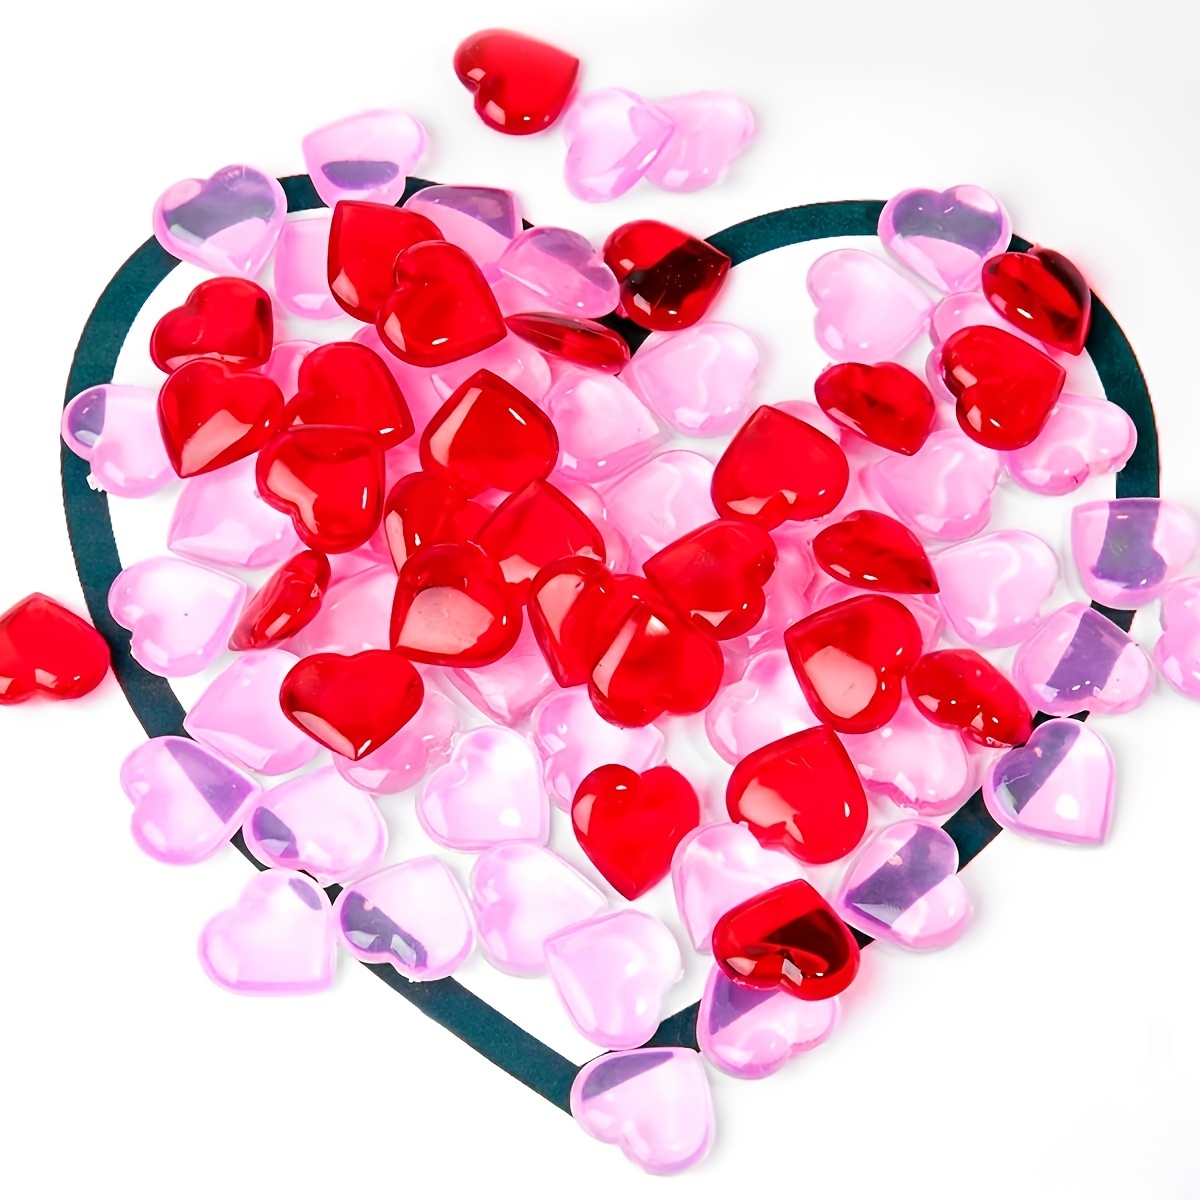 Acrylic Heart Gems for Valentine Vase Filler Decor,152 Pcs Red Pink Heart